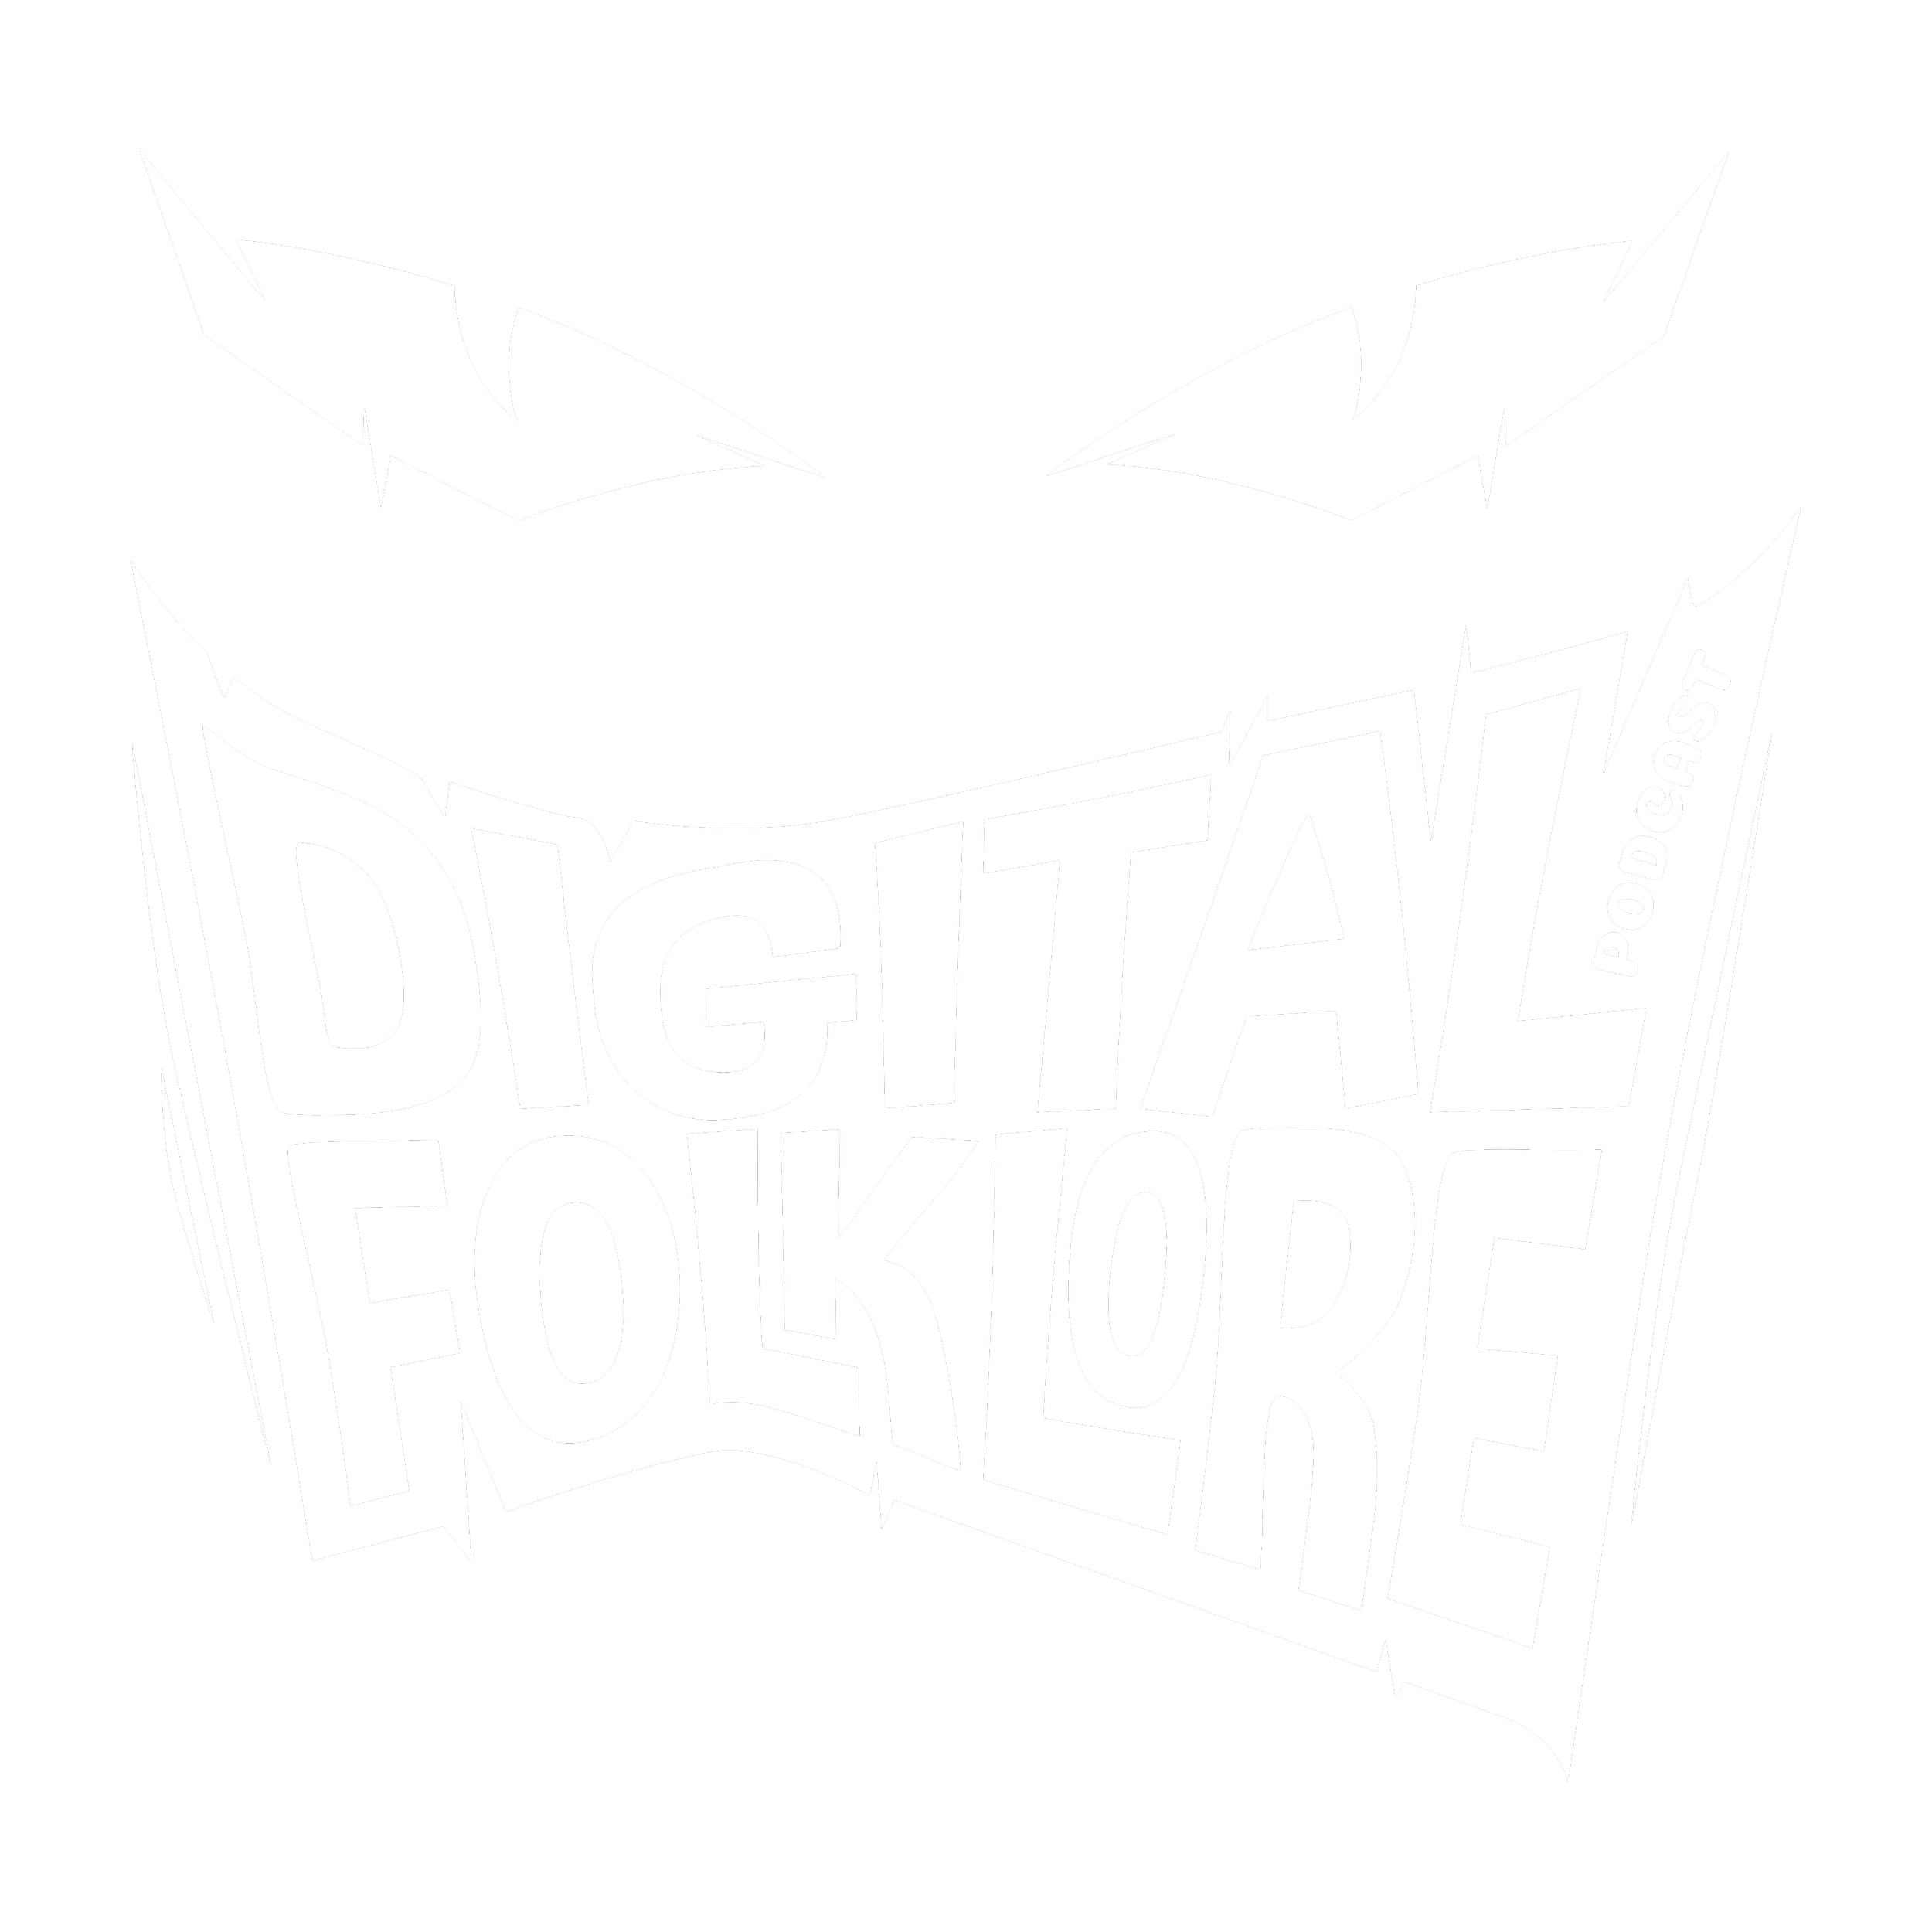 Digital Folklore Podcast